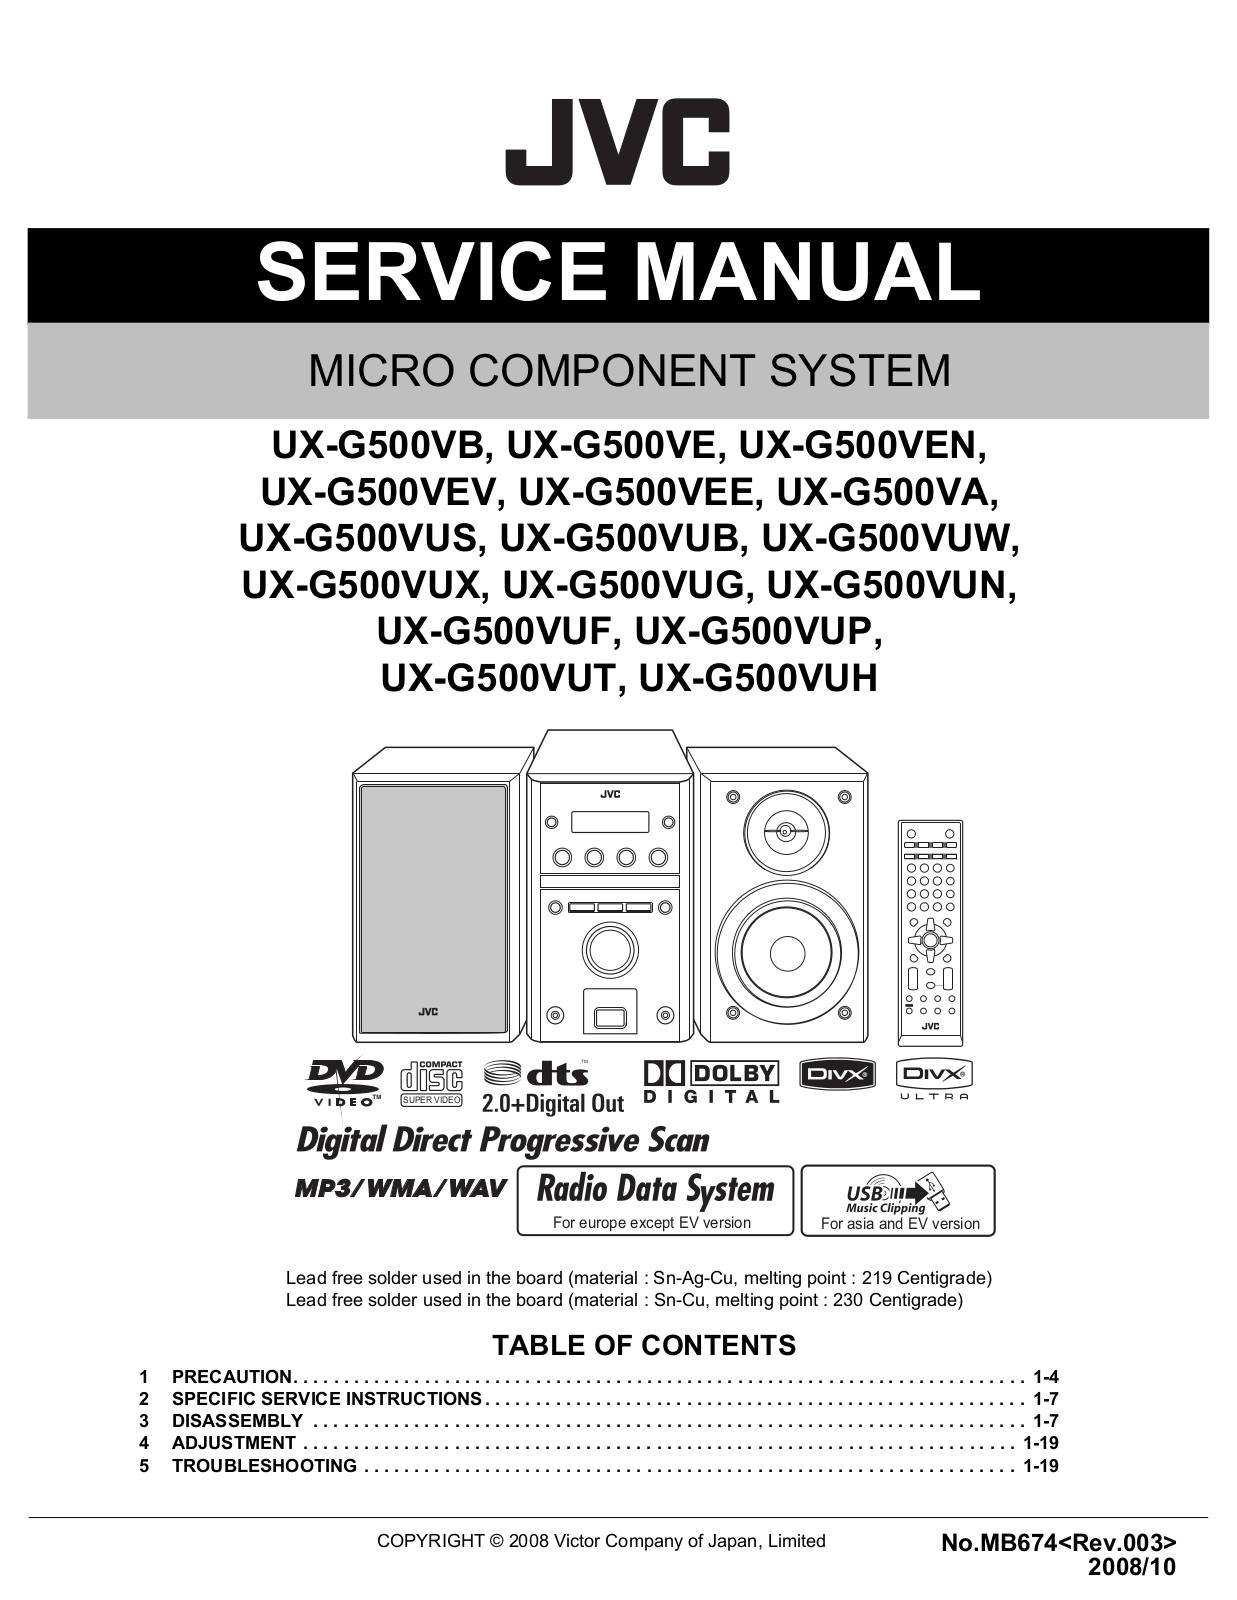 Jvc UX-G500 Service Manual